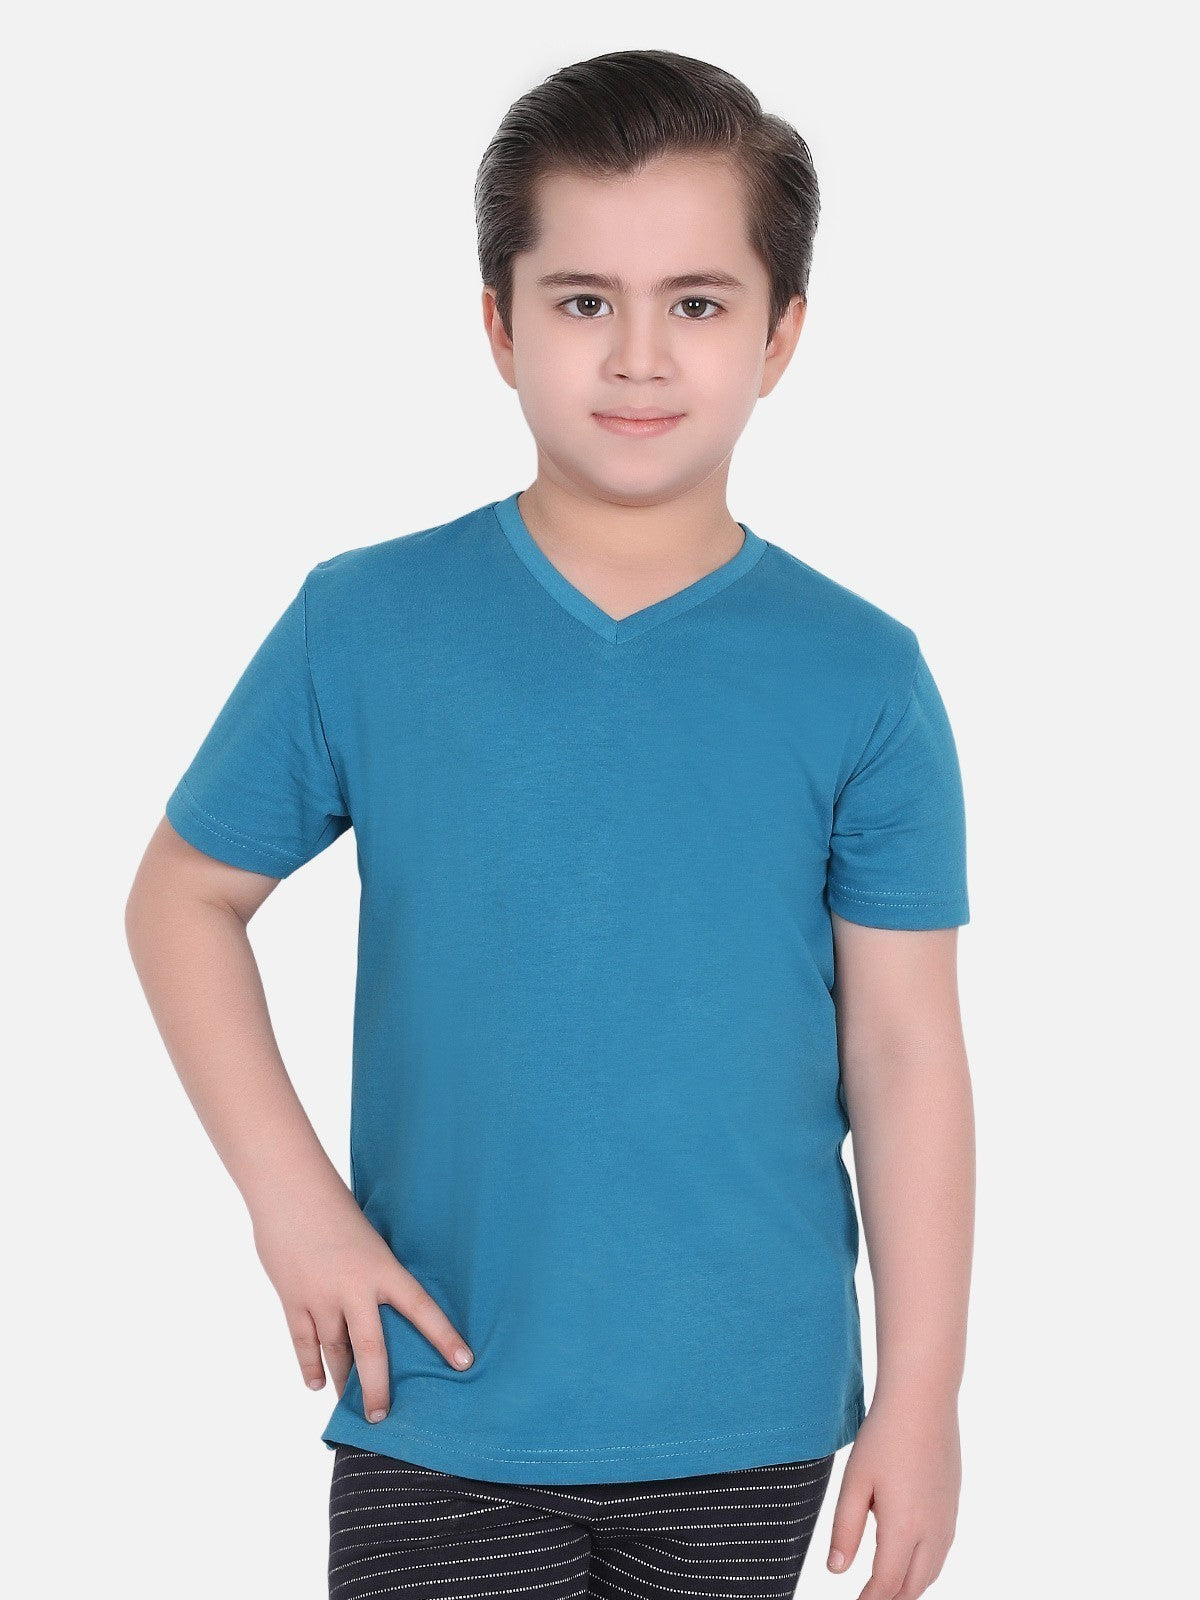 Boy's Blue Half Sleeves Basic Tee - EBTBT19-036